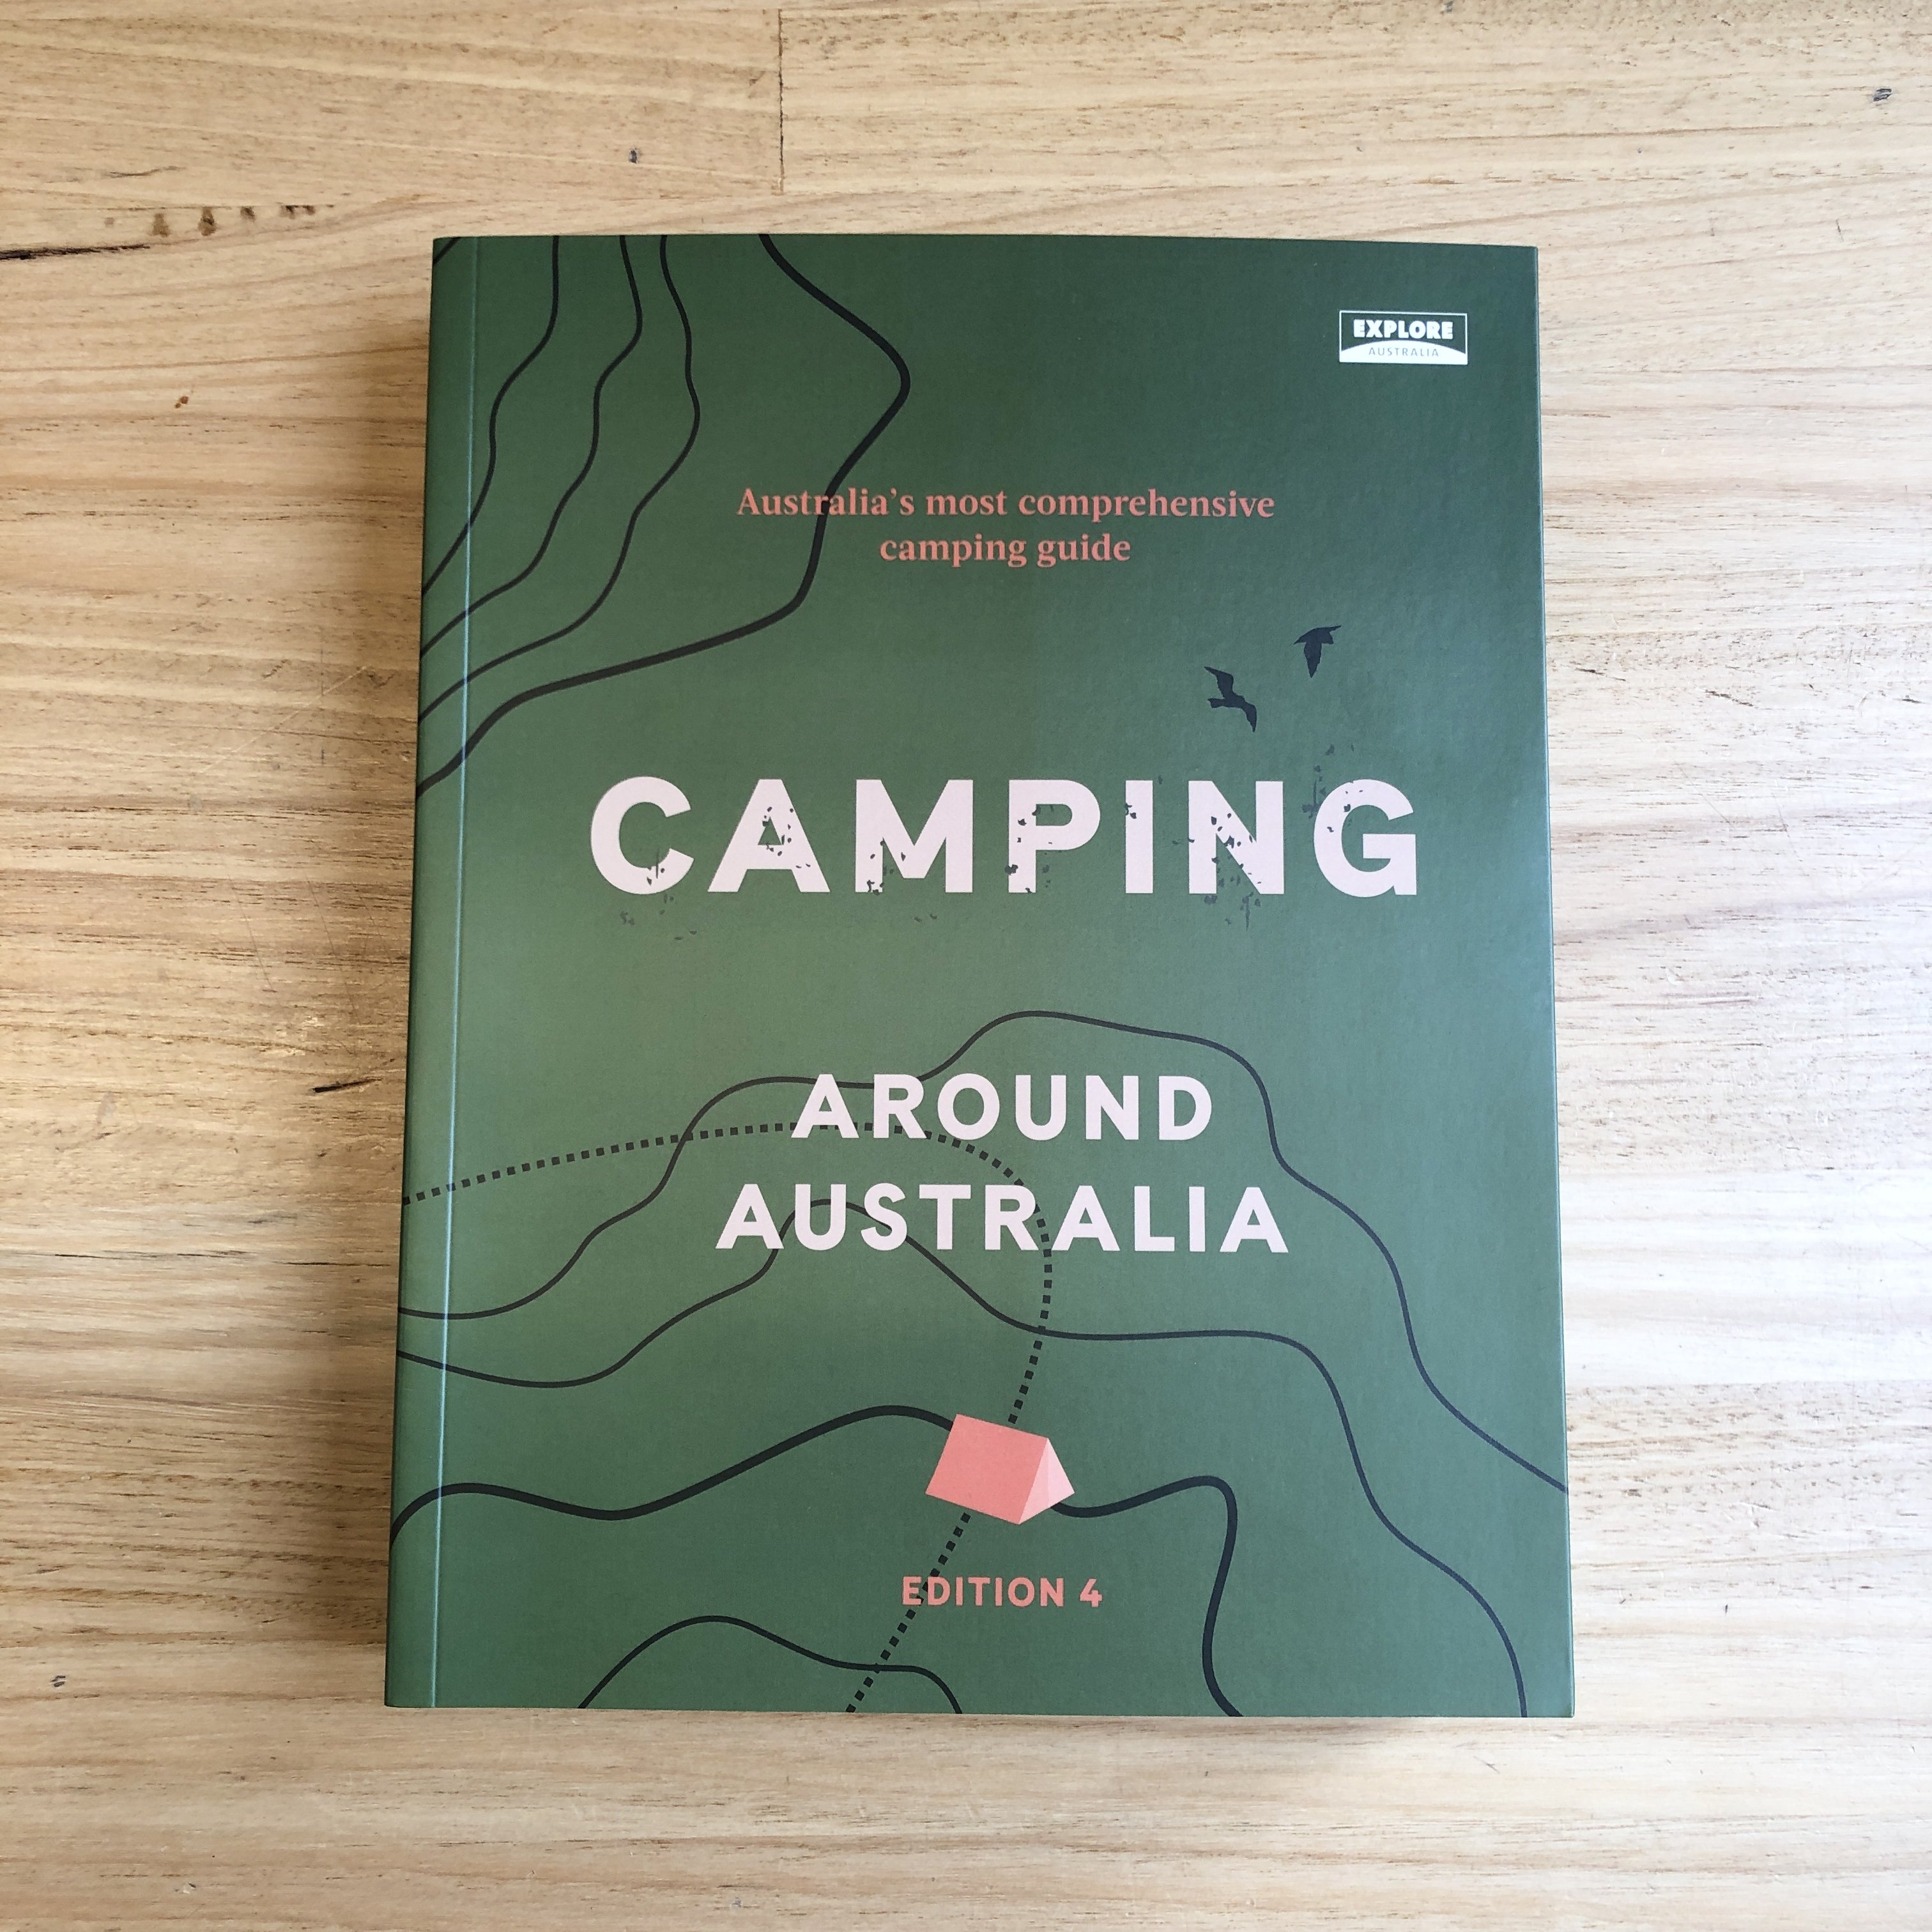 Camping Around Australia